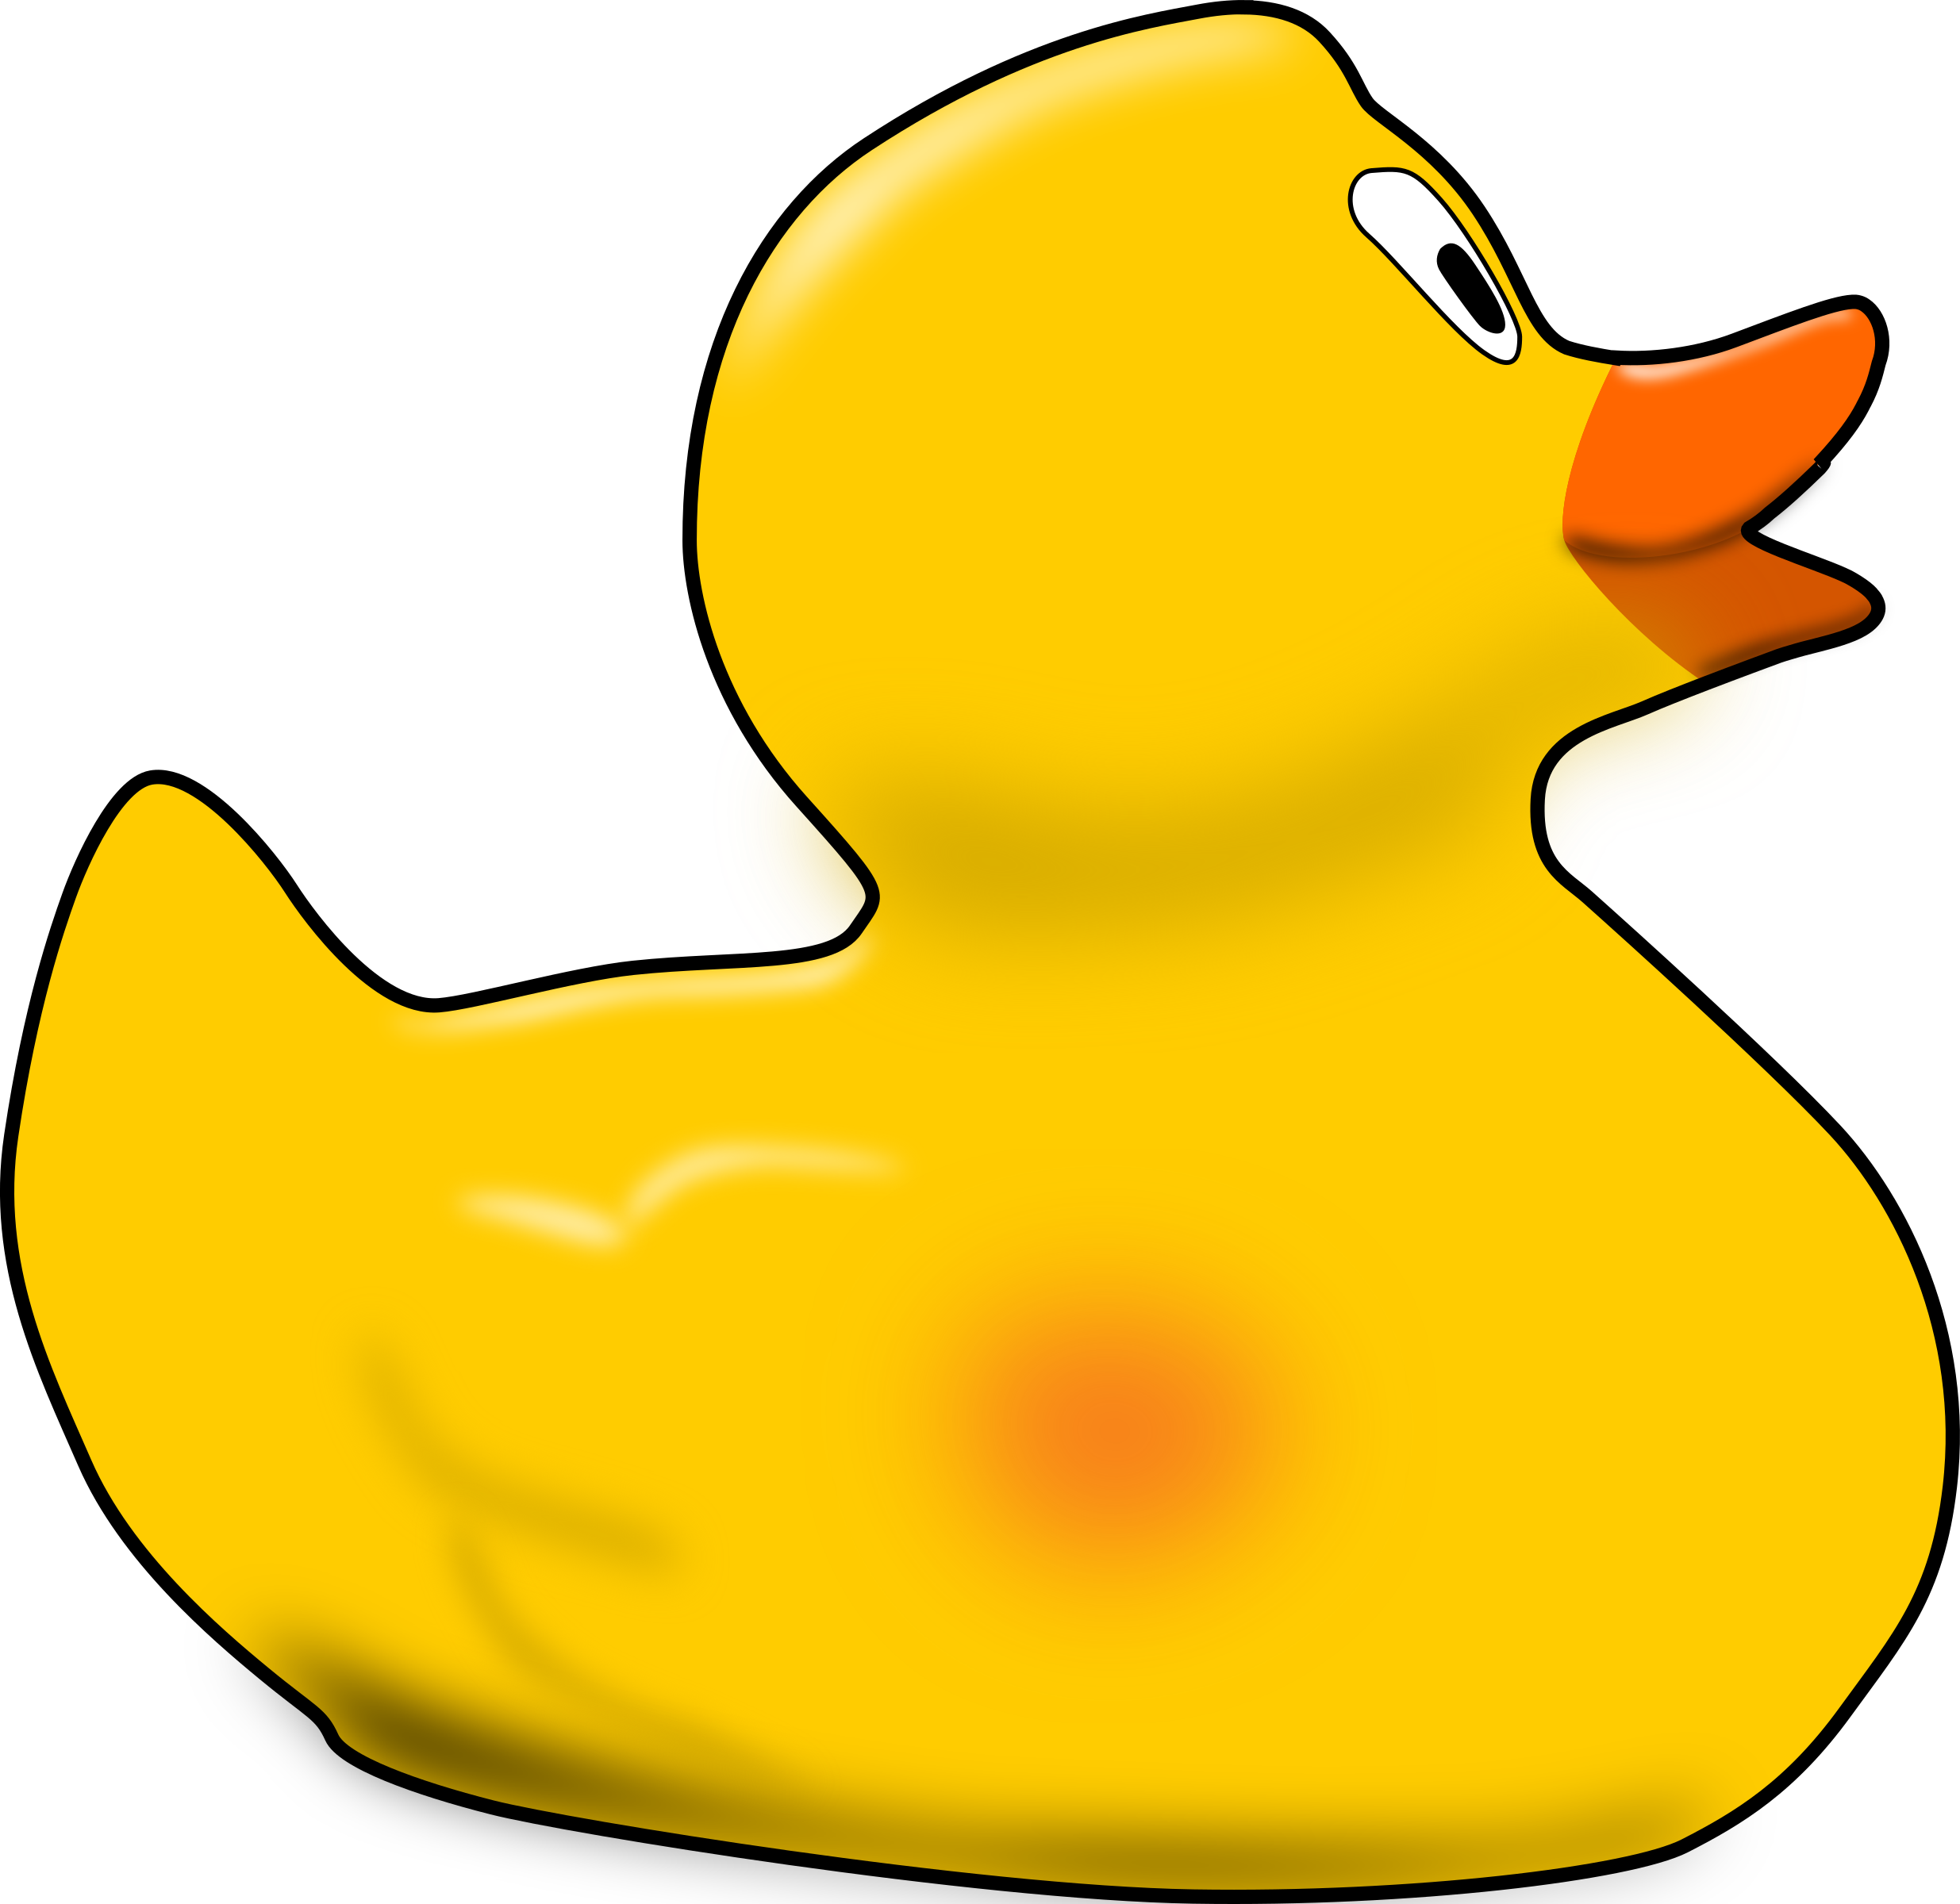 Ducks clipart rubber duck. Rubberduck big image png